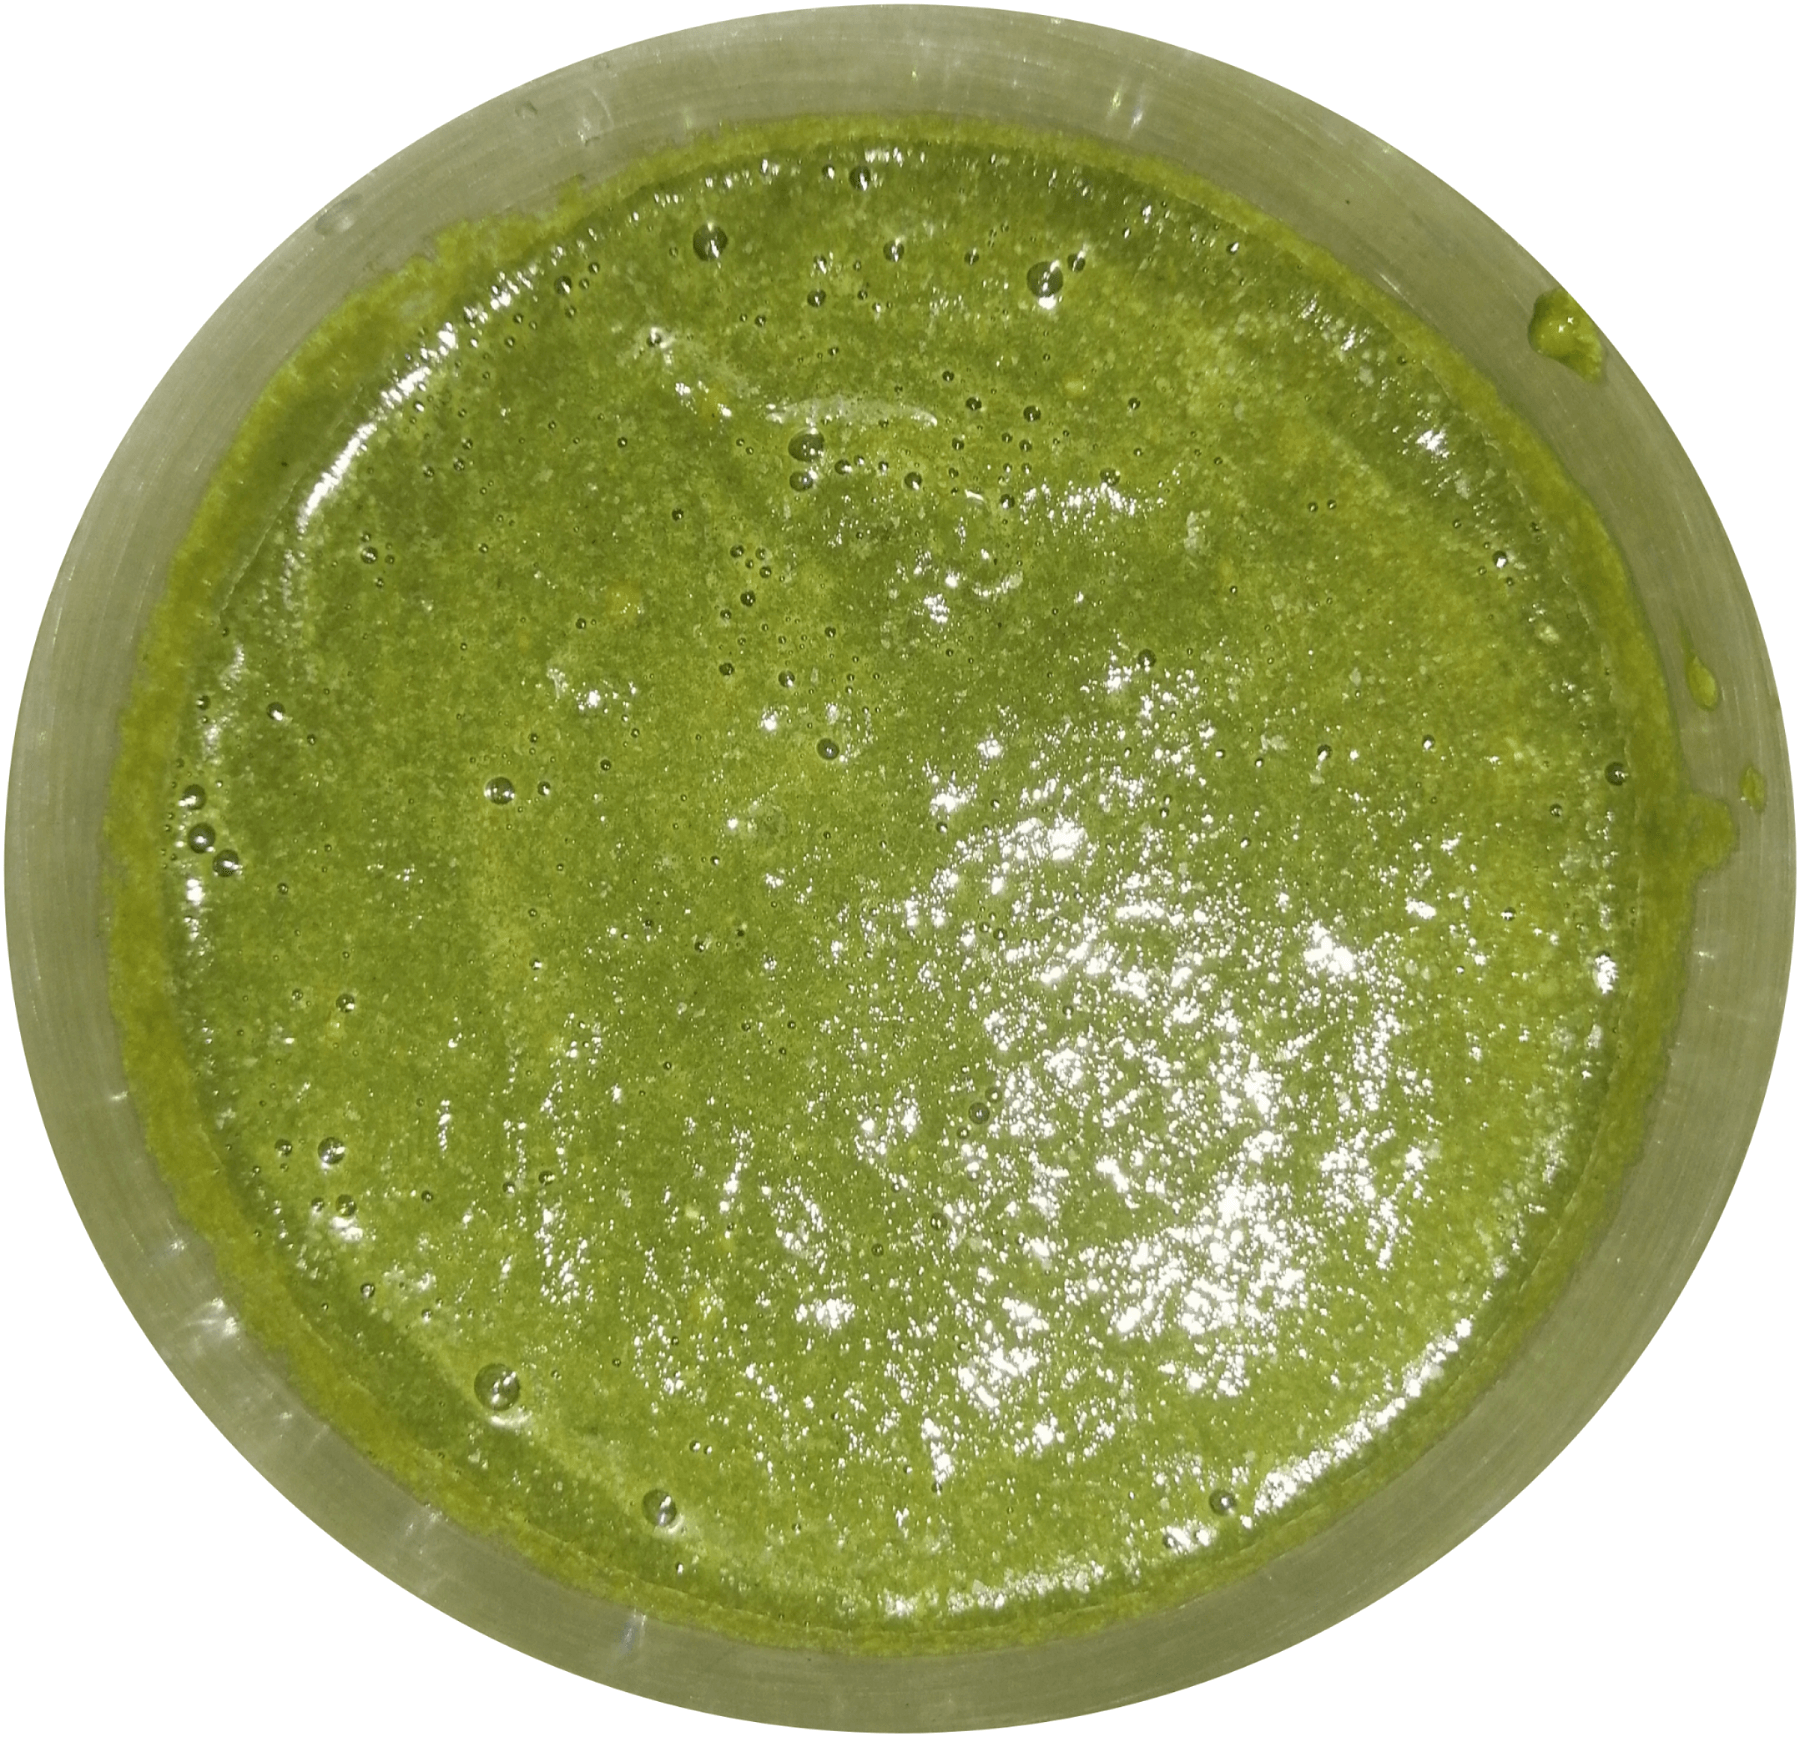 Green Chutney Recipe